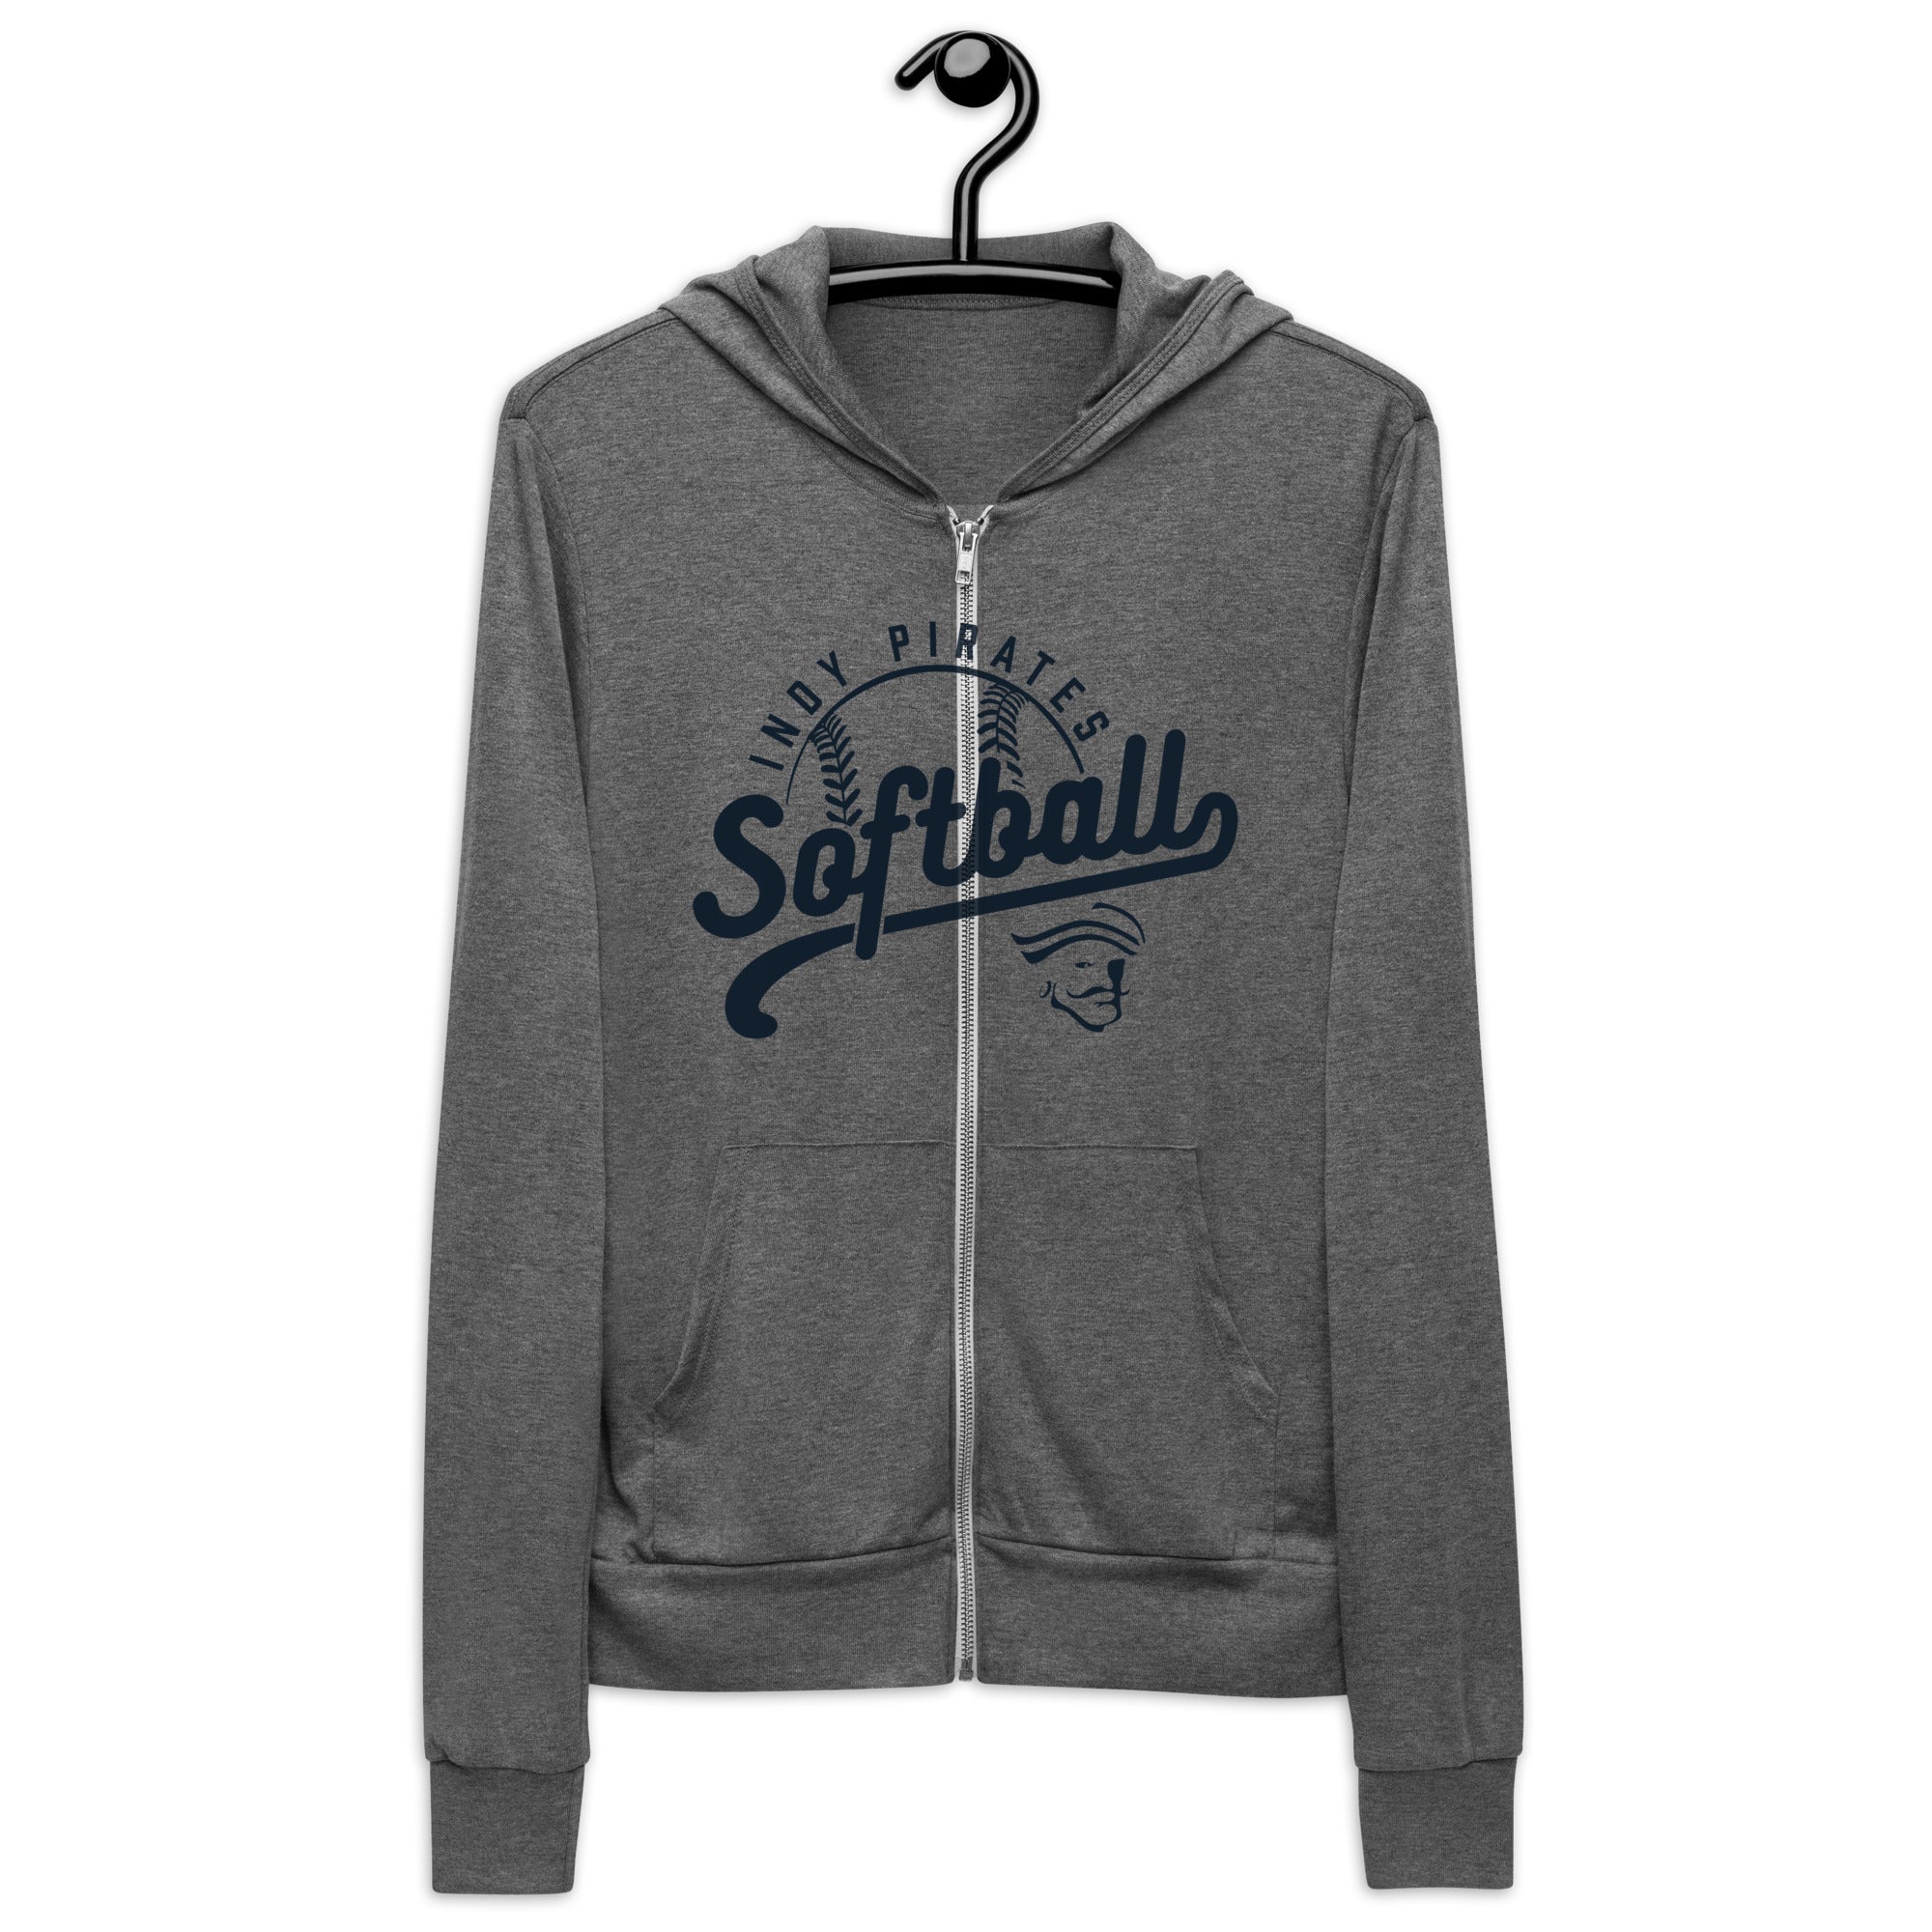 Indy Softball Unisex zip hoodie